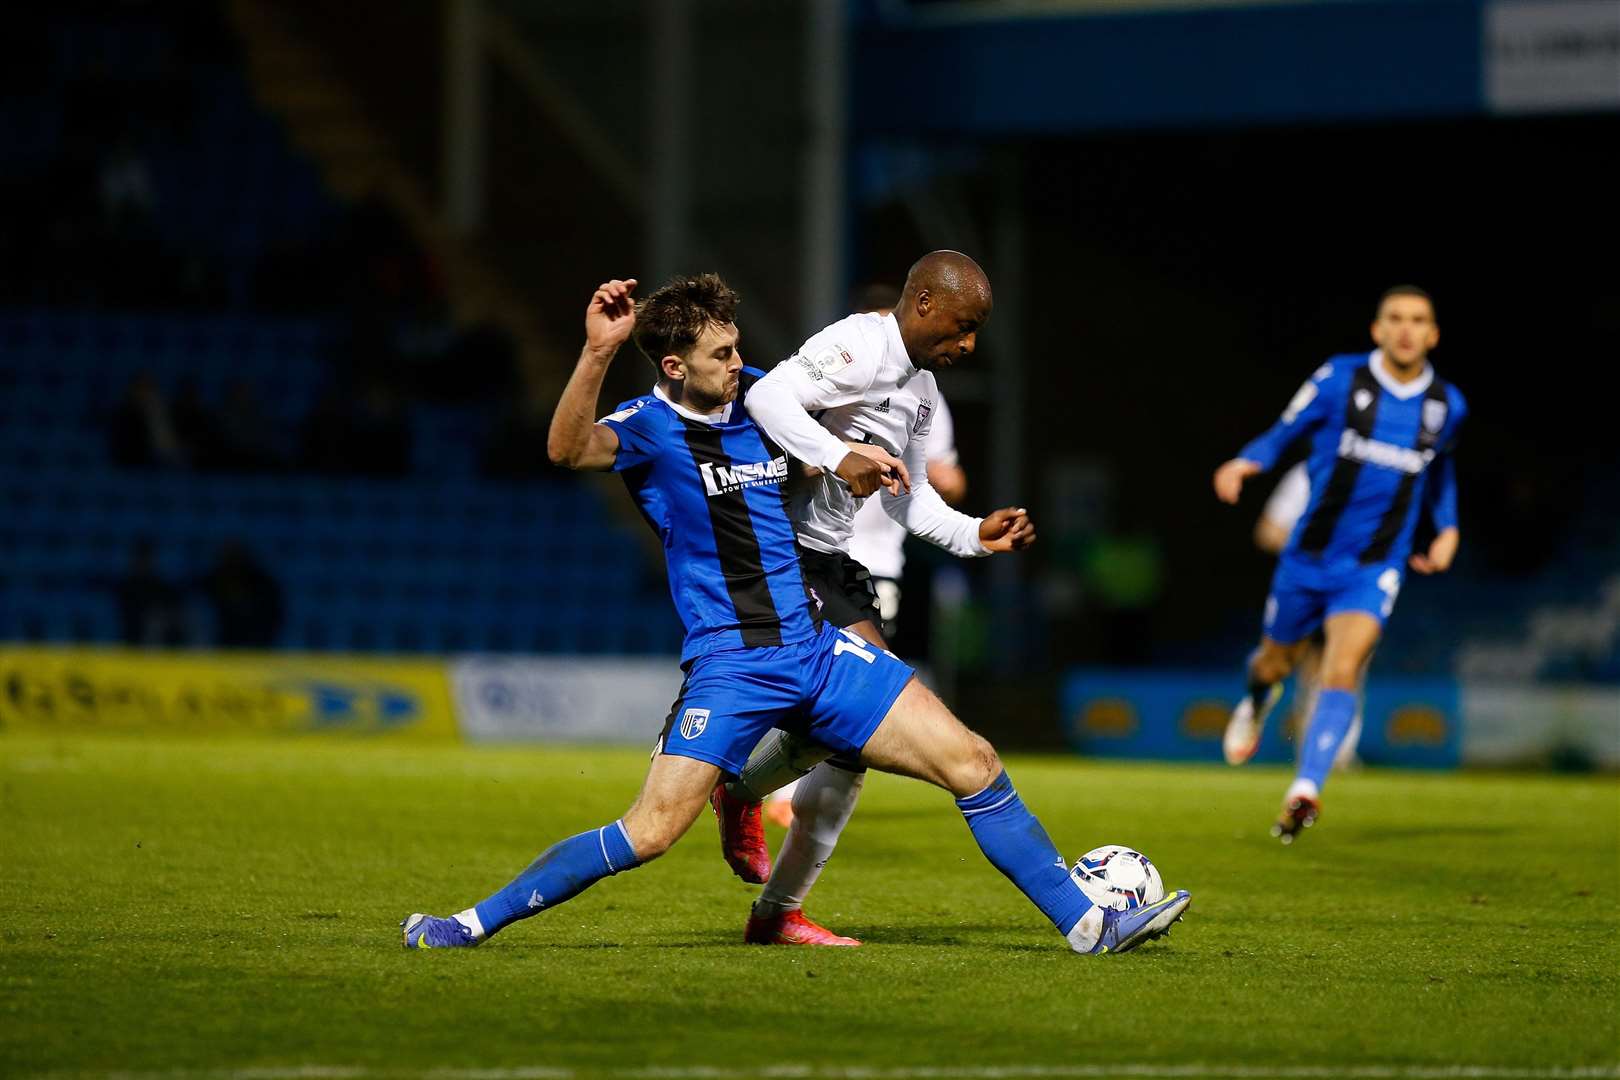 Robbie McKenzie puts in a challenge on Ipswich forward Sone Aluko Picture: Andy Jones